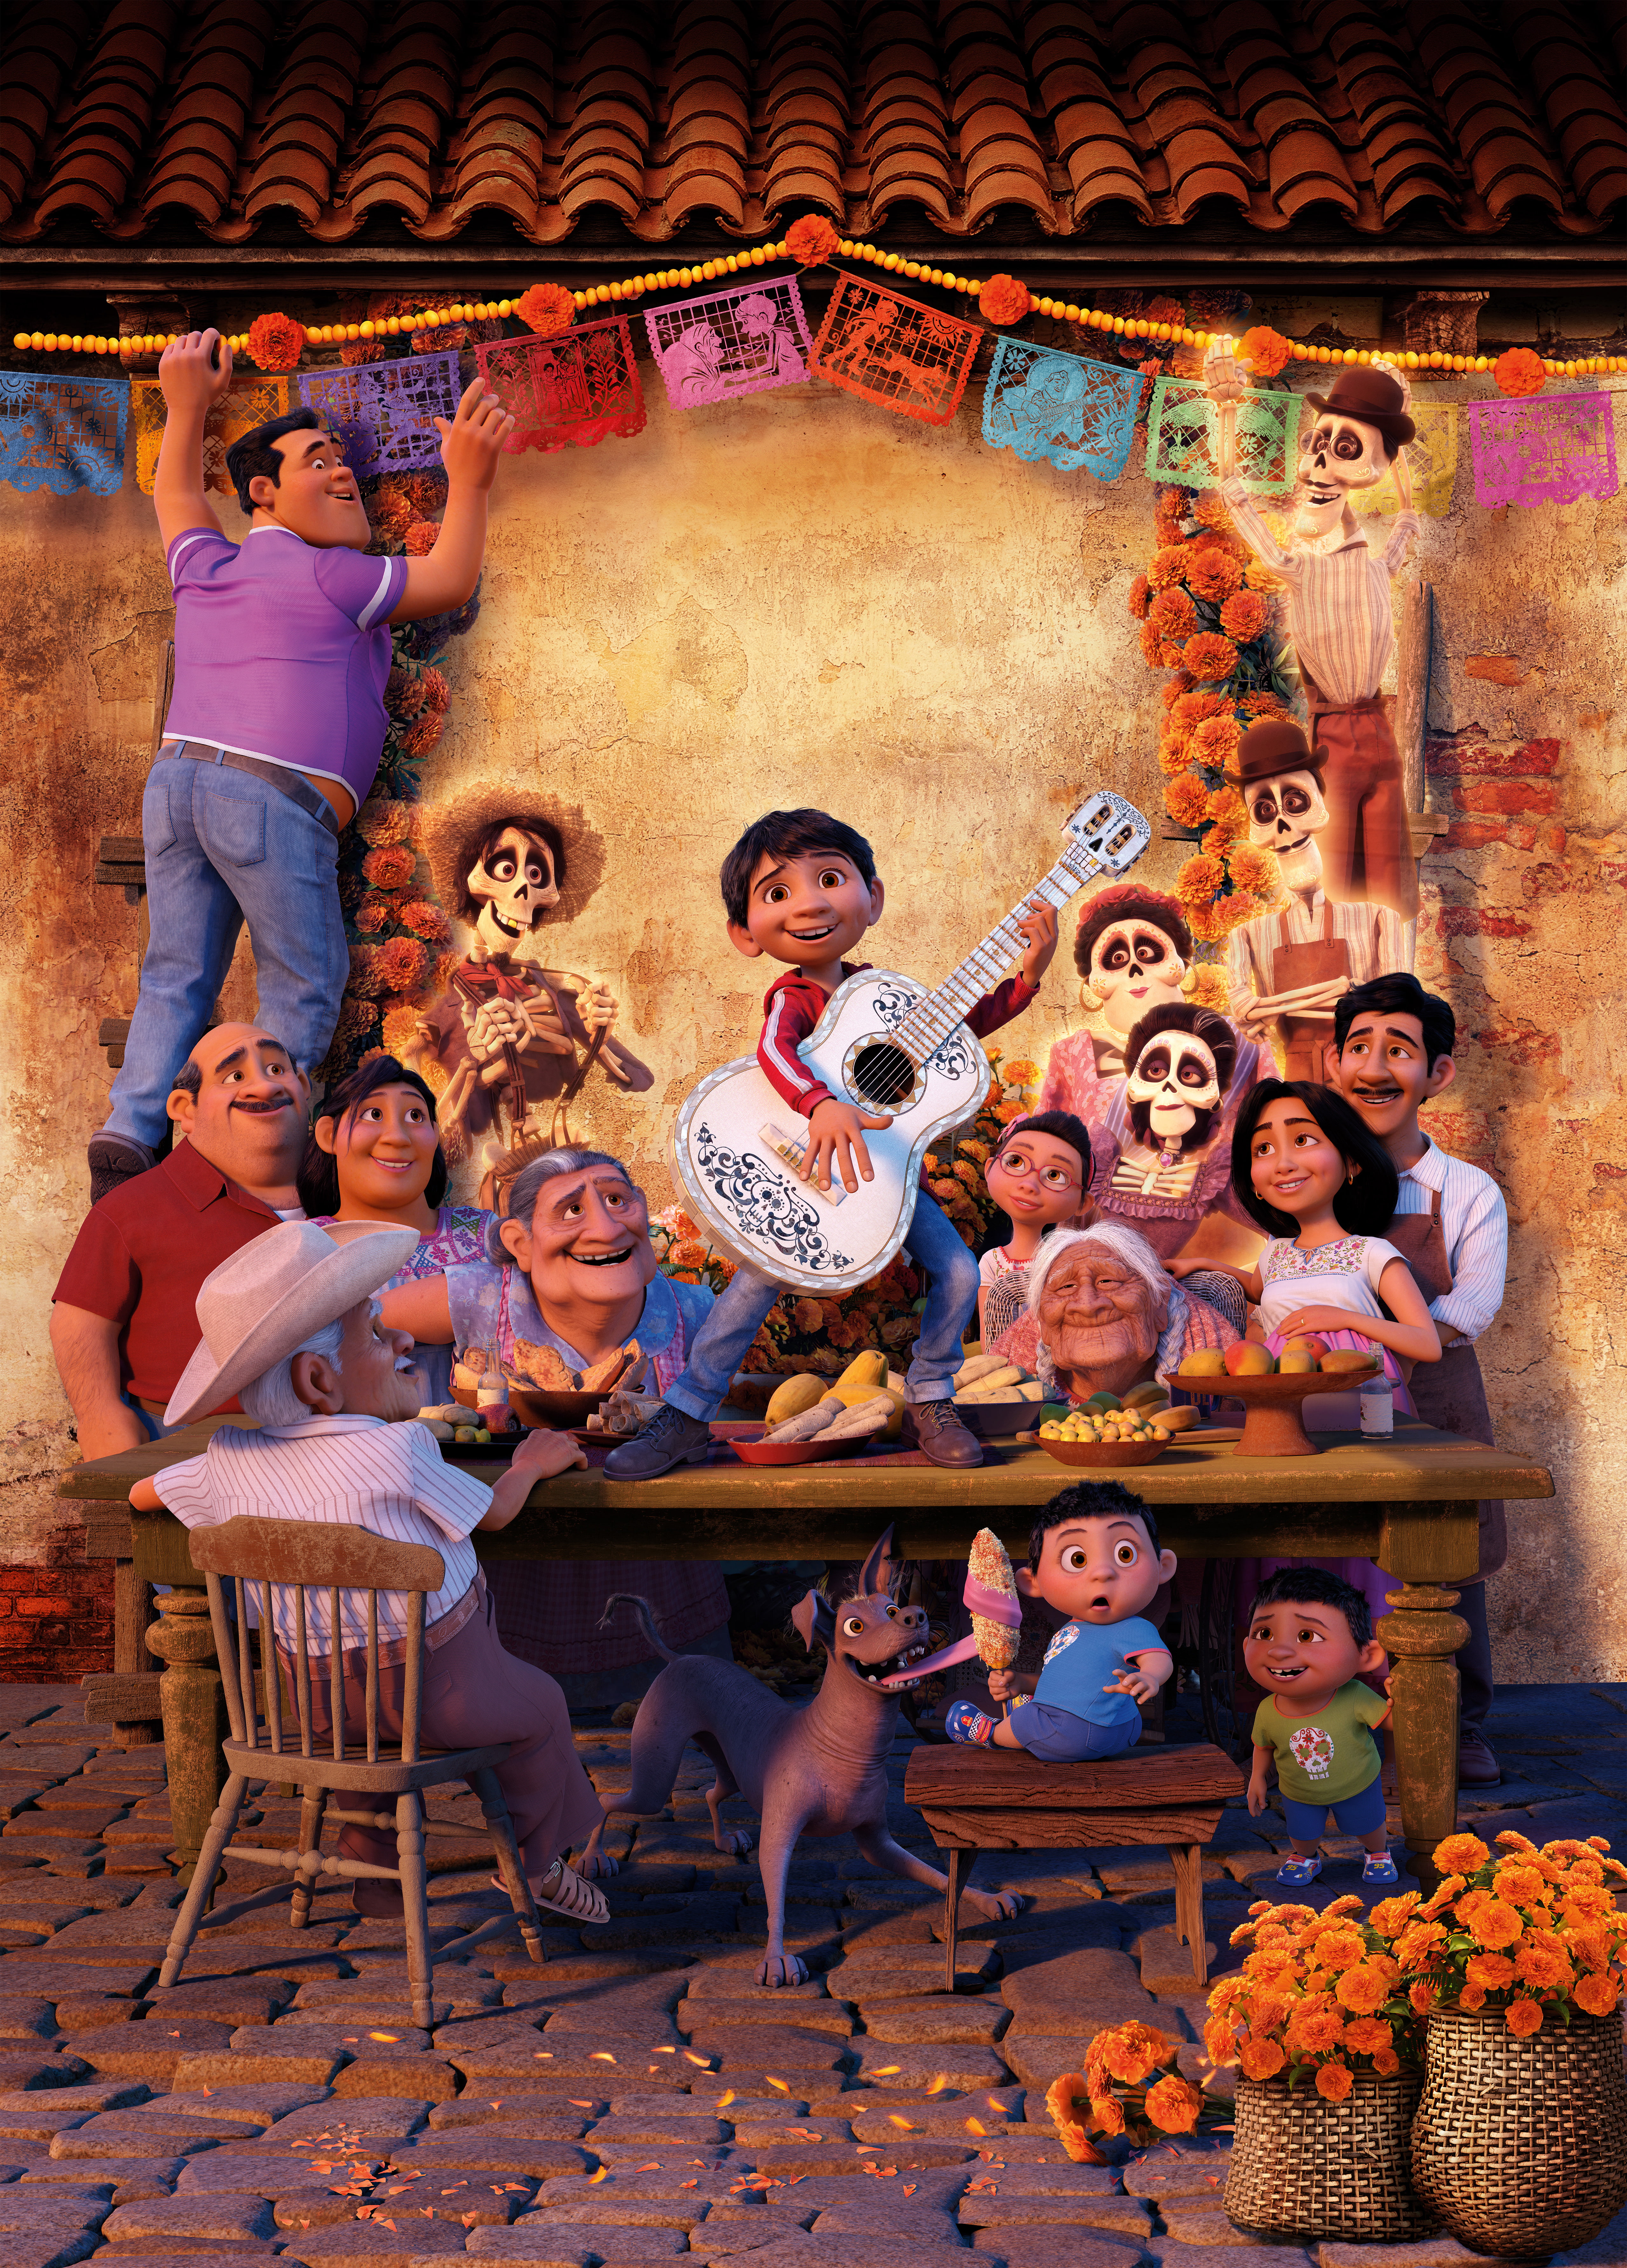 Coco movie digital wallpaper, Pixar, Animation, HD, 5K